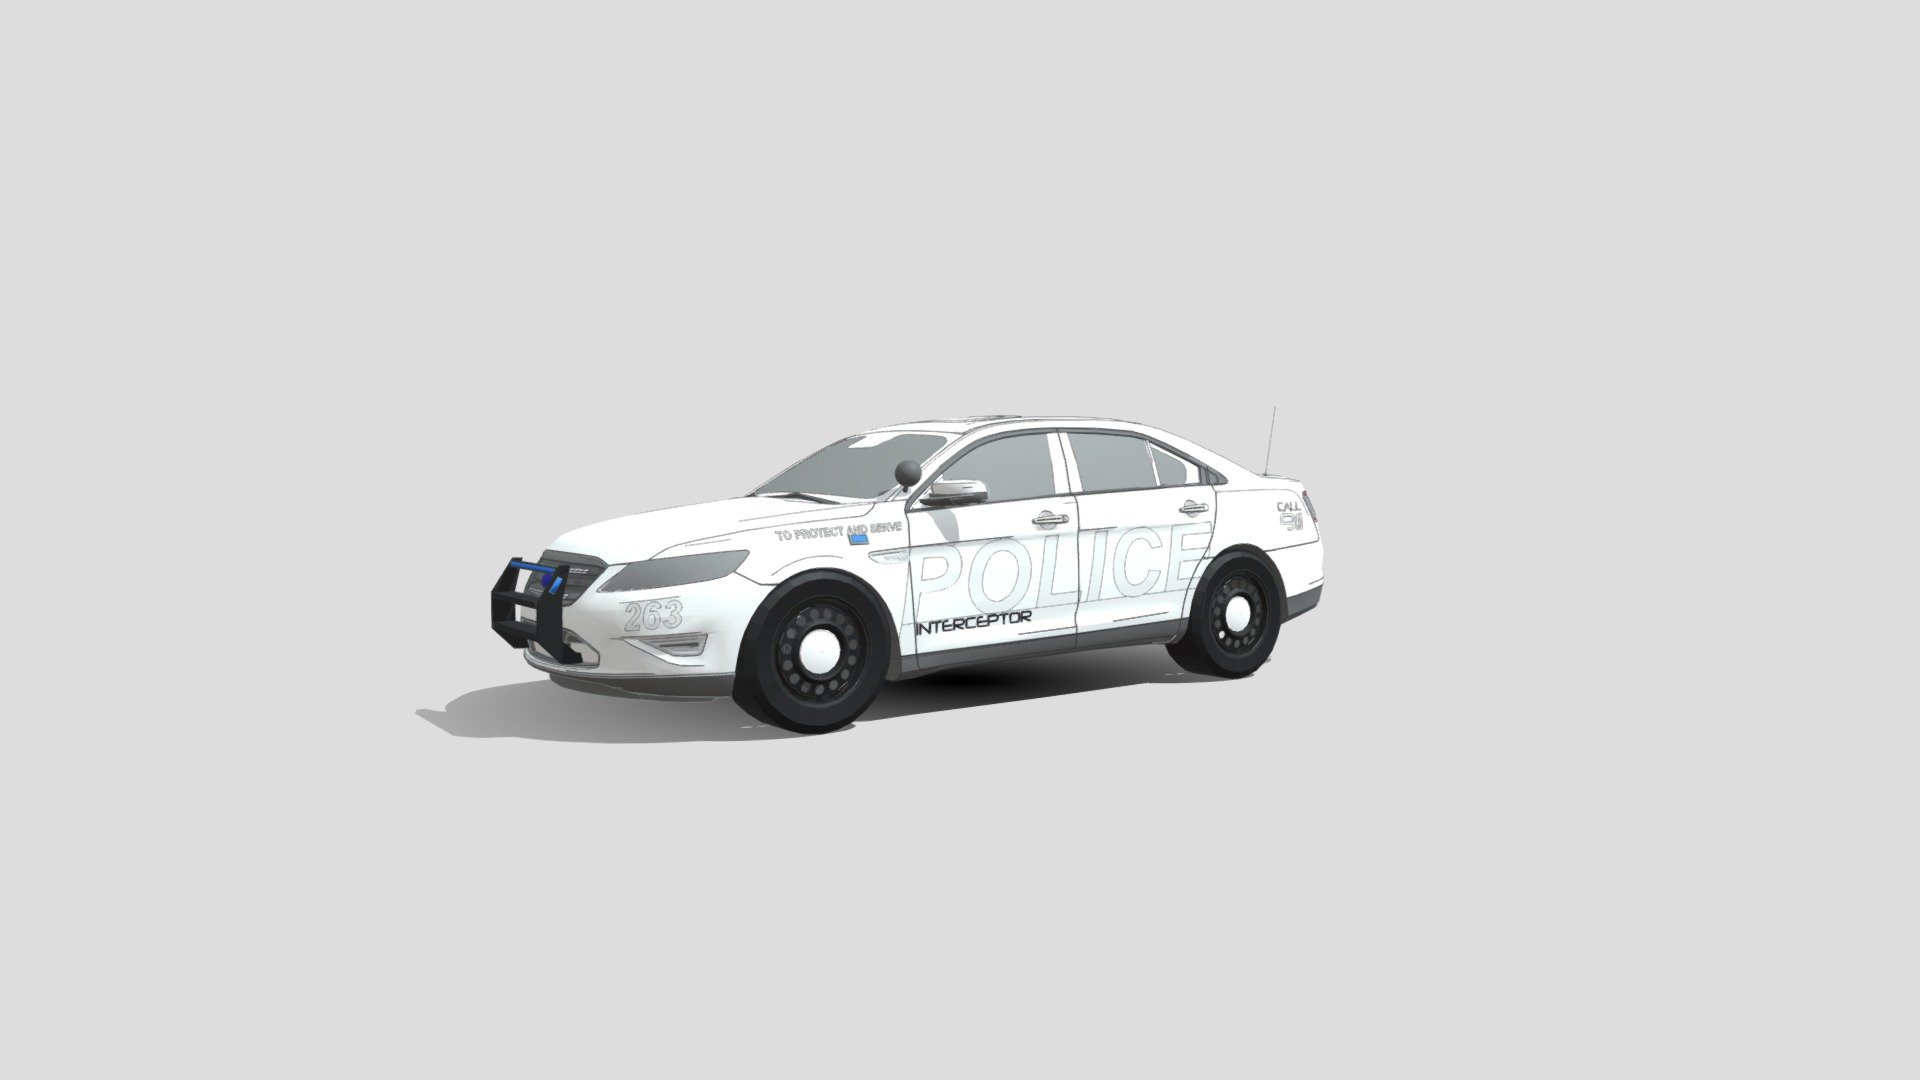 2012 Ford Taurus-Police